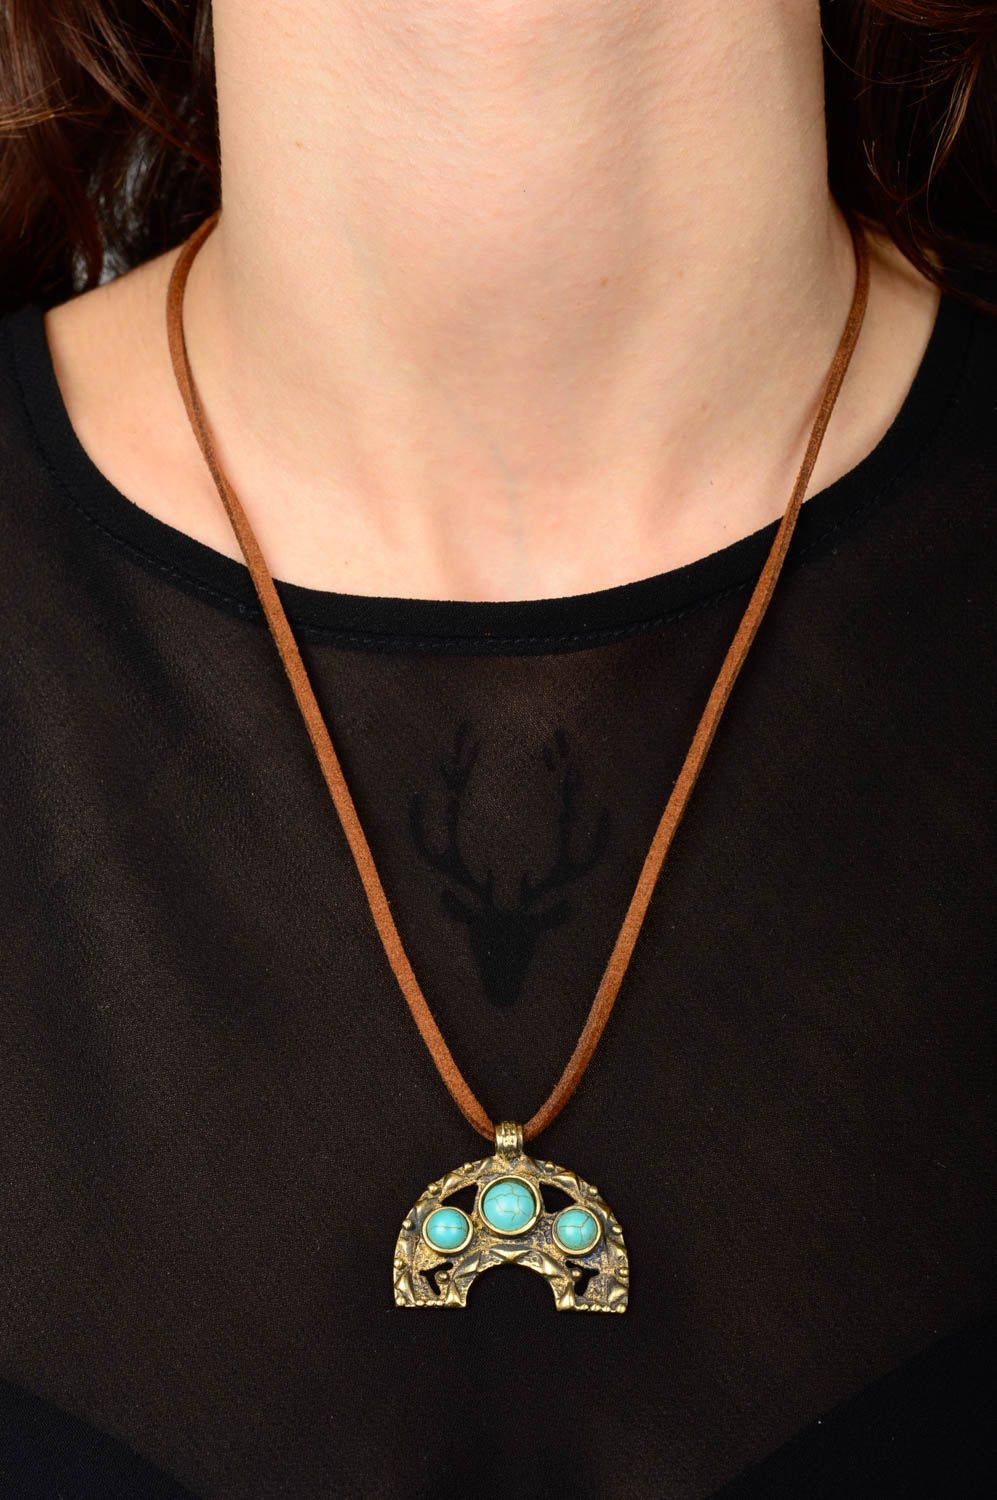 Handmade pendant with turquoise unusual metal pendant designer accessory photo 2